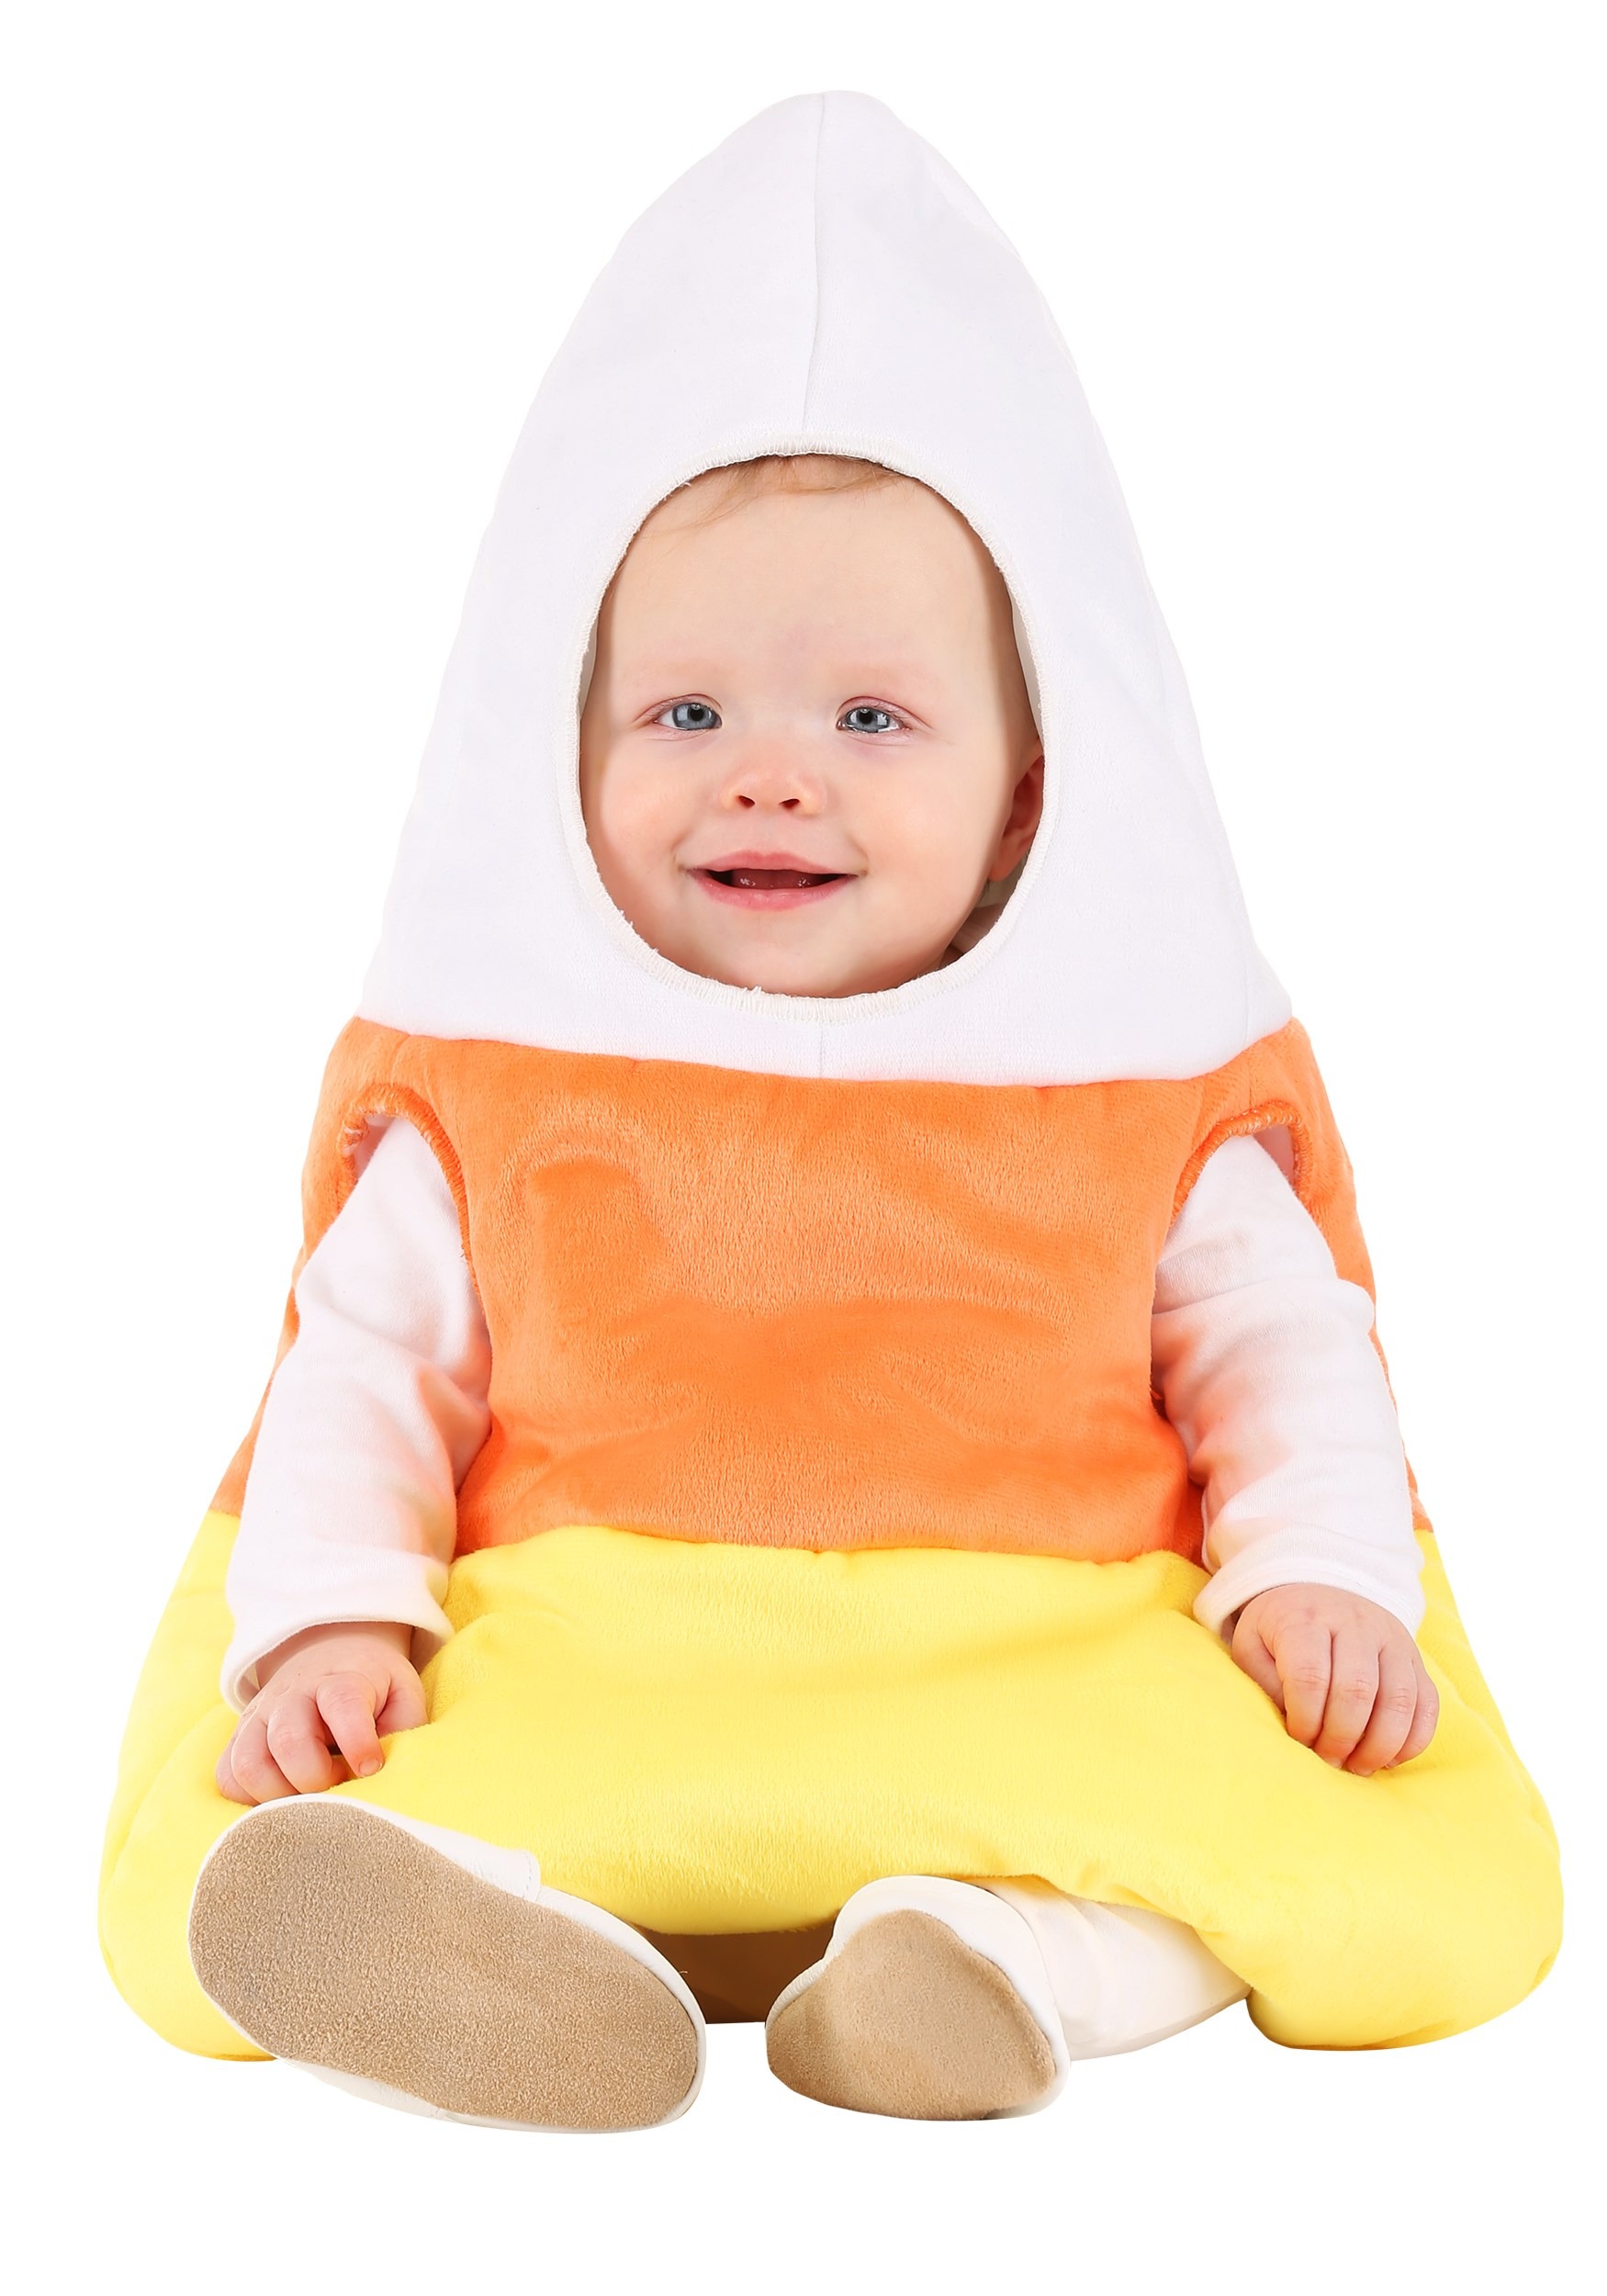 Candy Corn Infant Costume